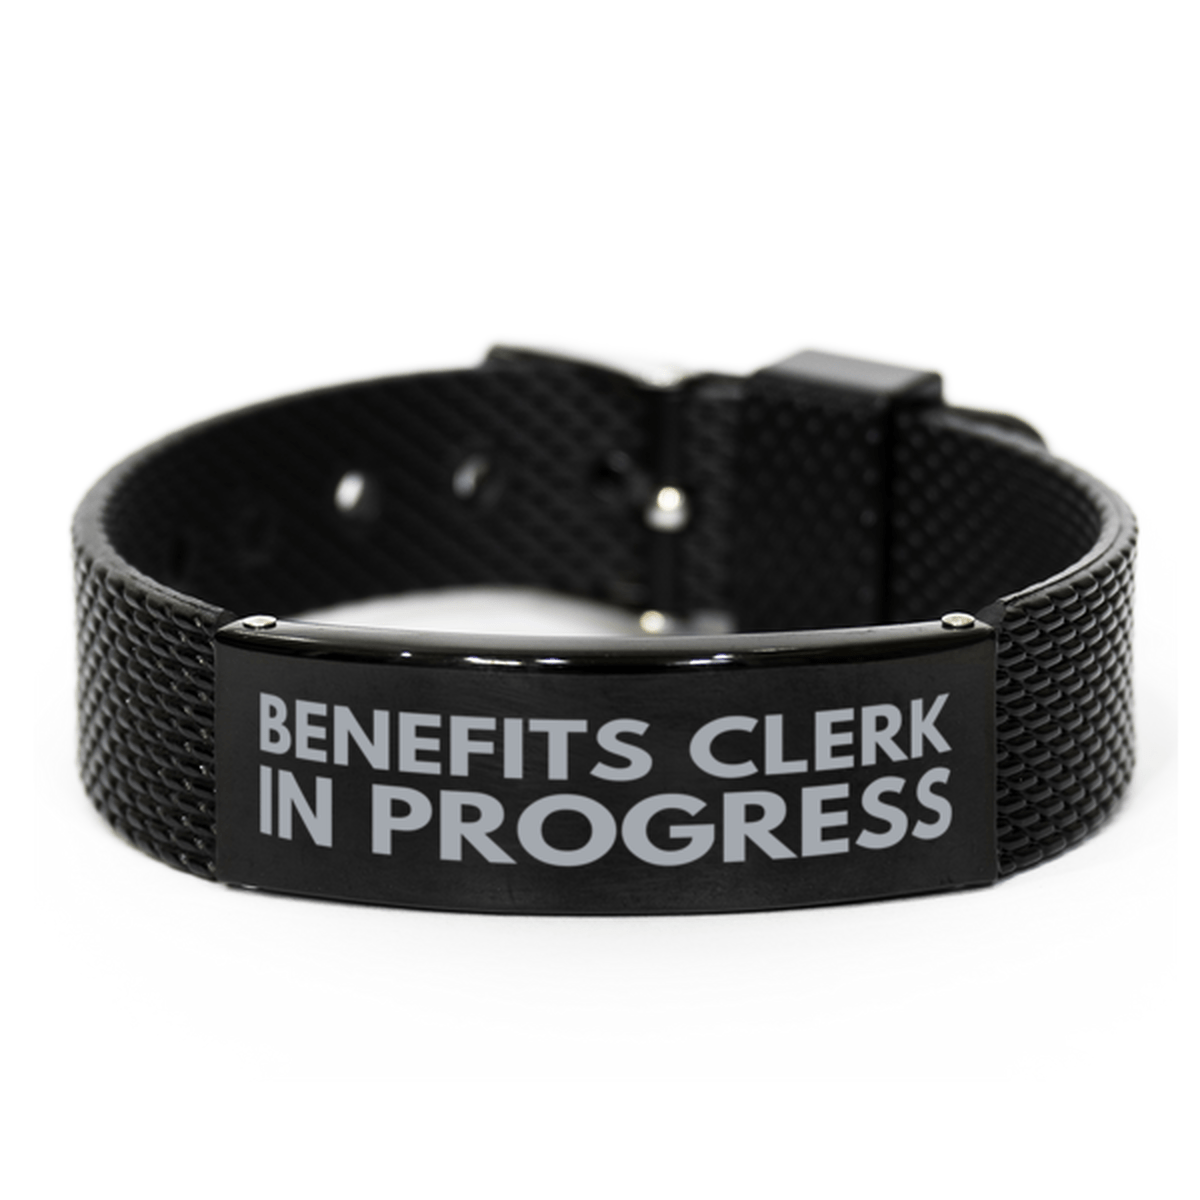 Inspirational Benefits Clerk Black Shark Mesh Bracelet, Benefits Clerk In Progress, Best Graduation Gifts for Students